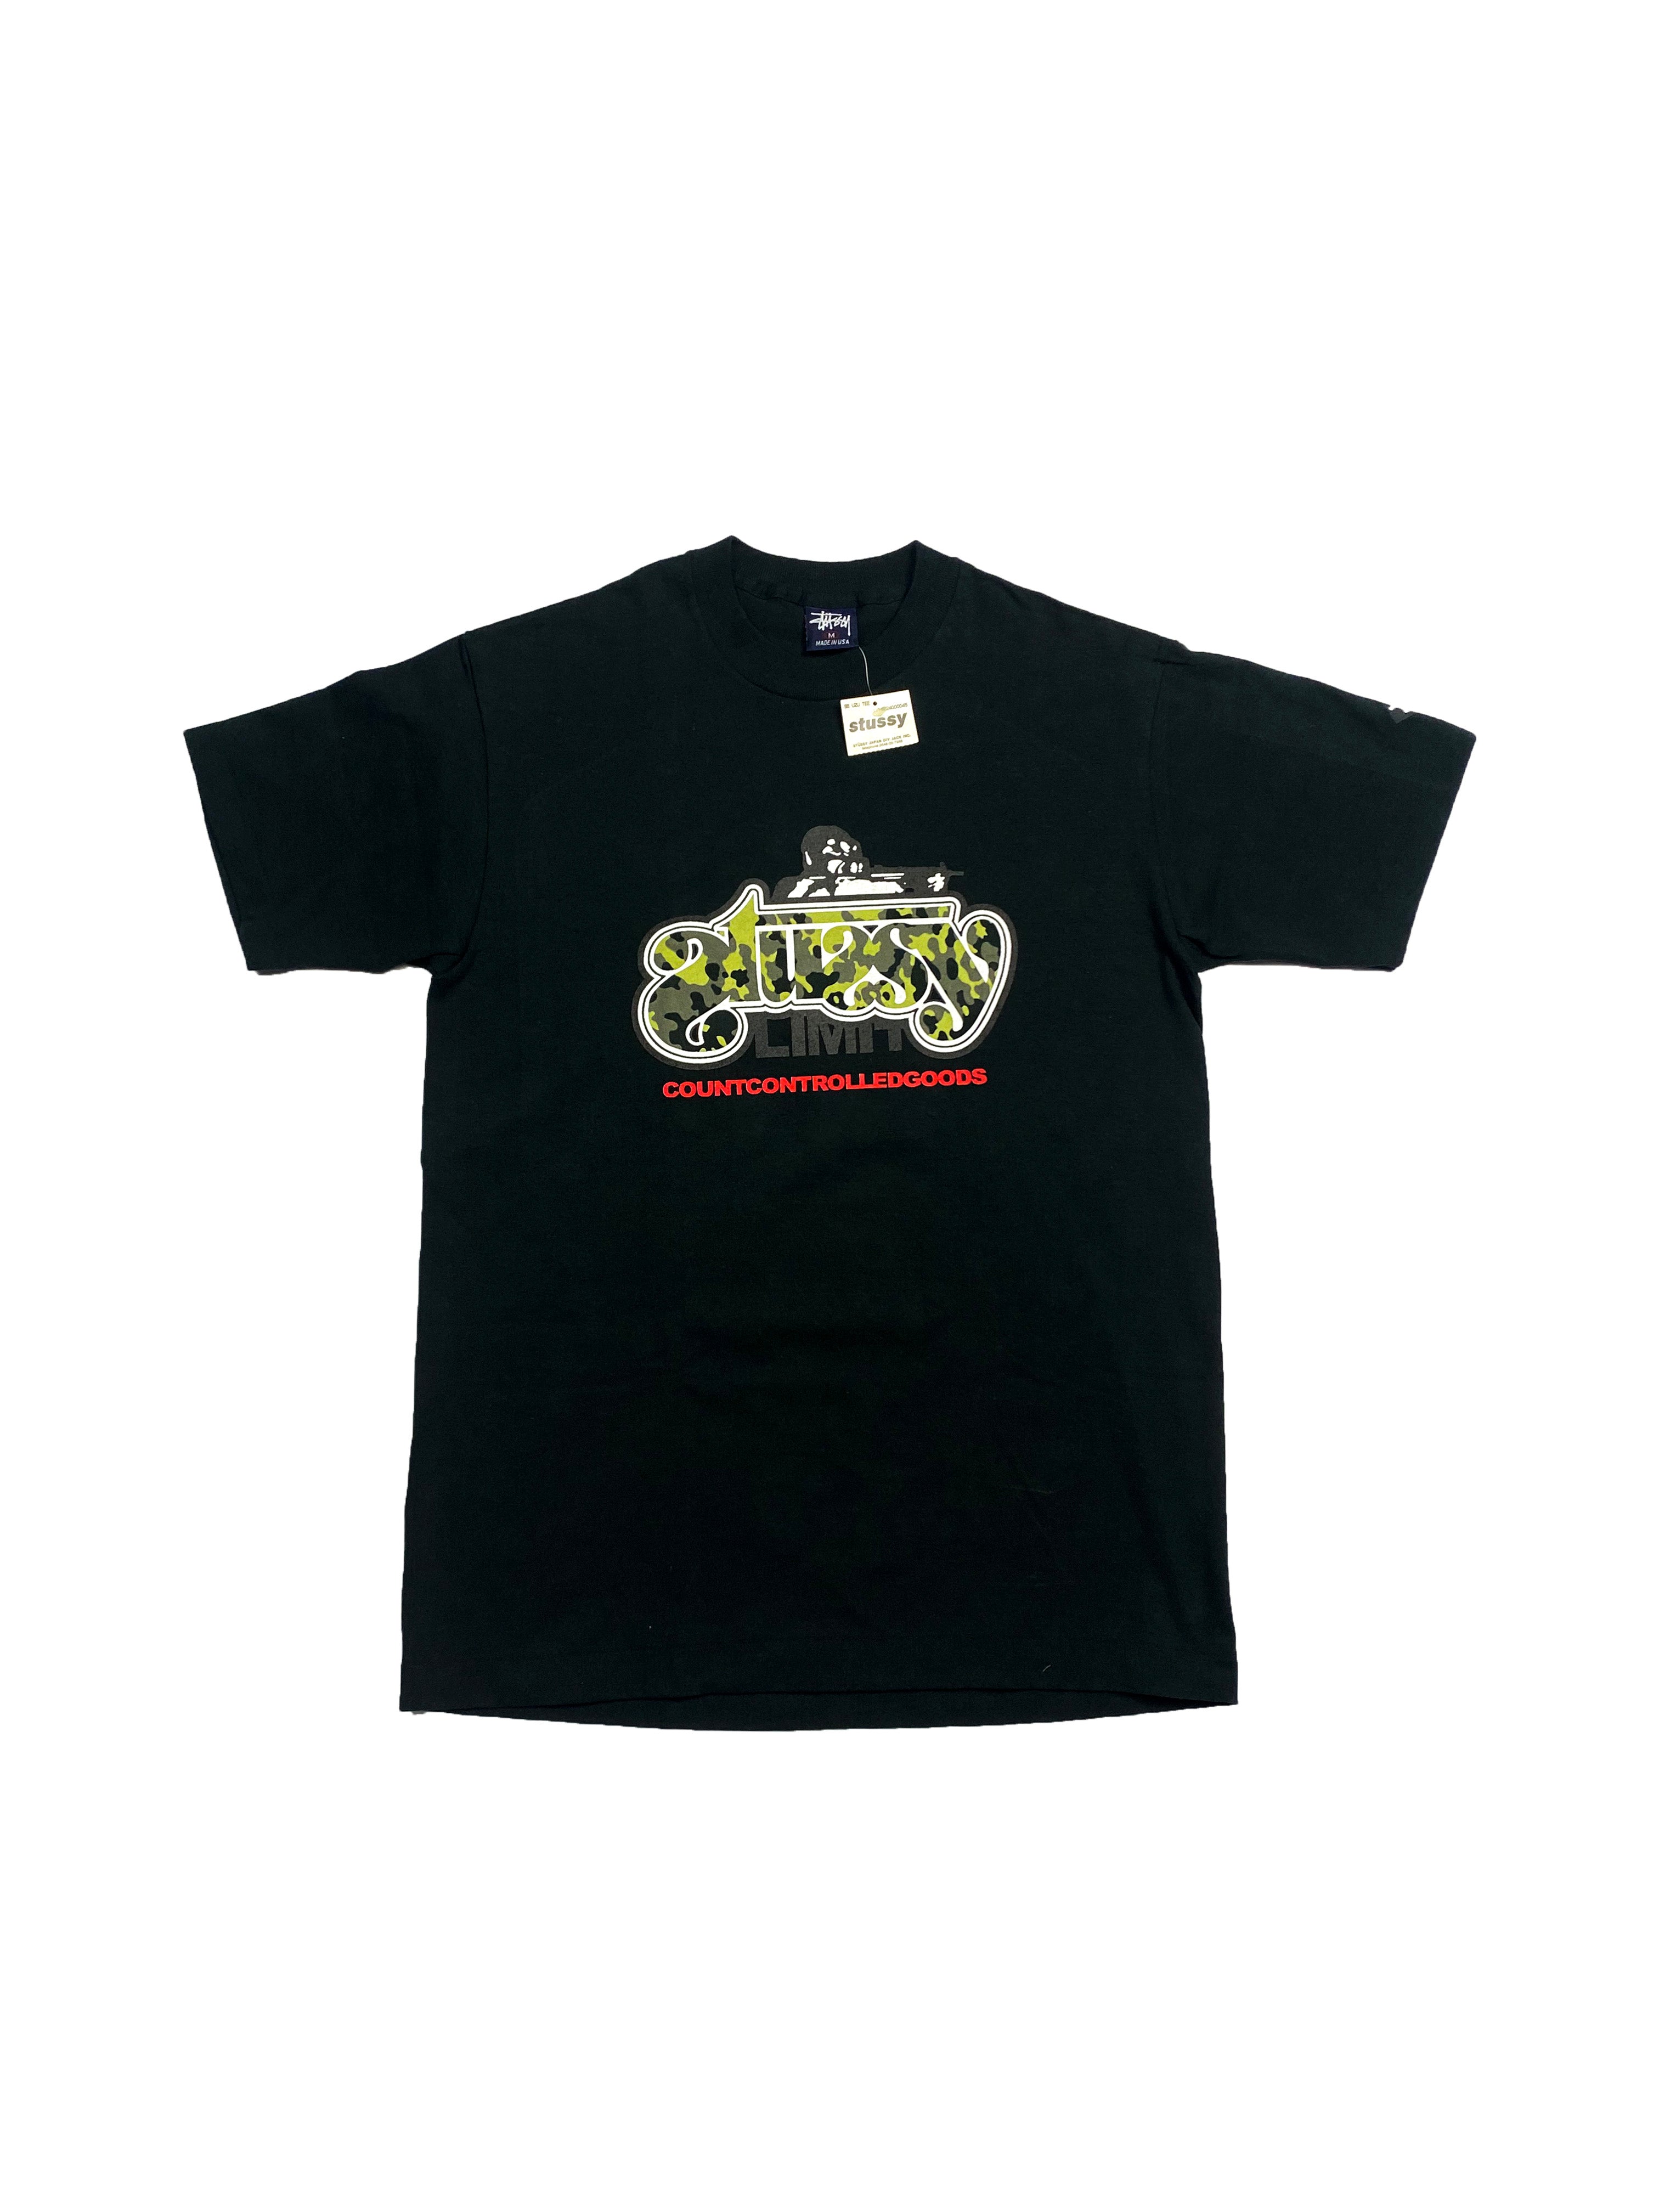 Stussy 'Countcotrolledgoods' T-shirt BNWT 90's